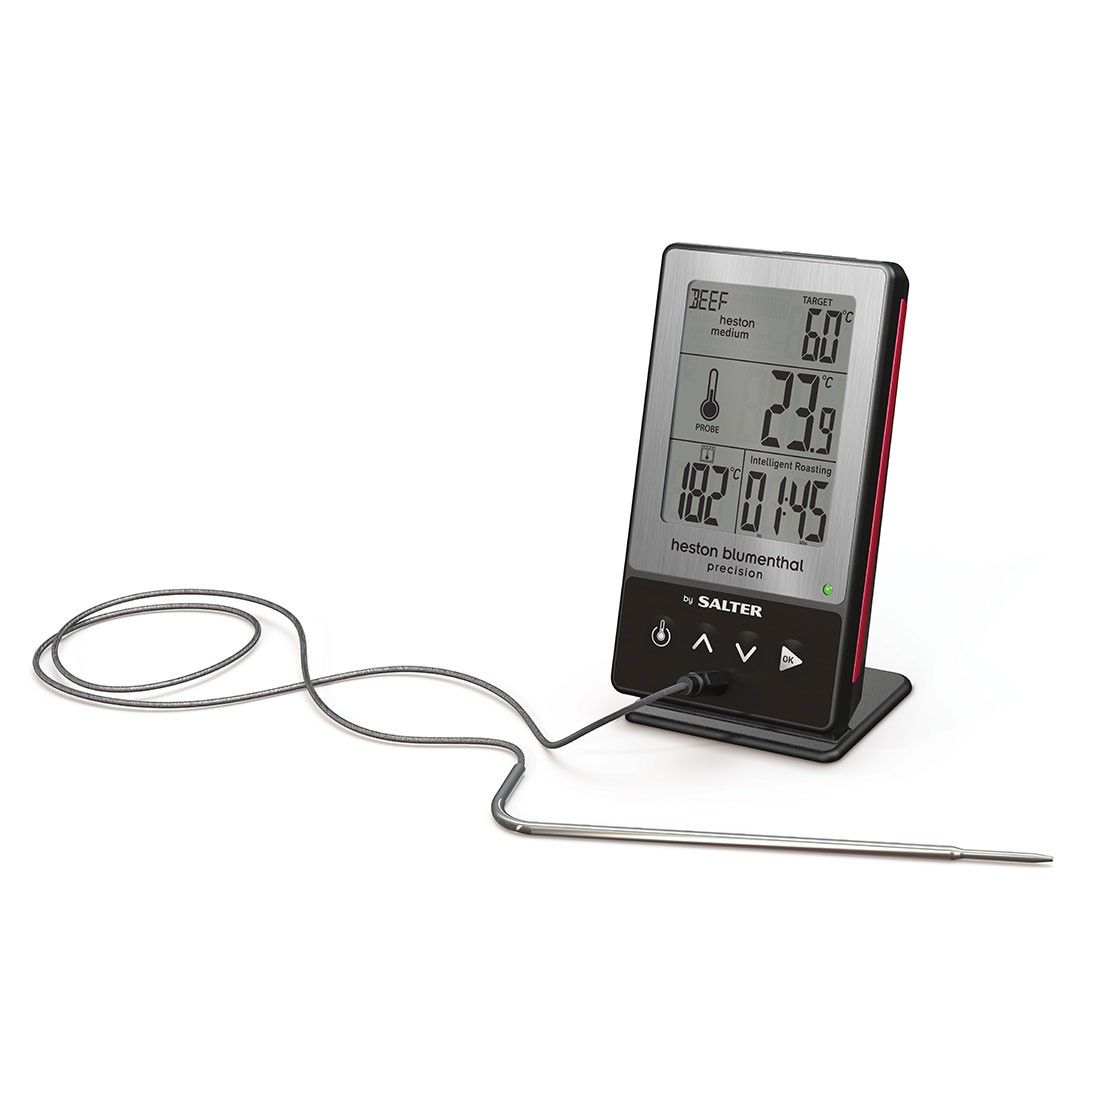 MasterChef Digital Meat Thermometer, Wireless Instant Food Probe